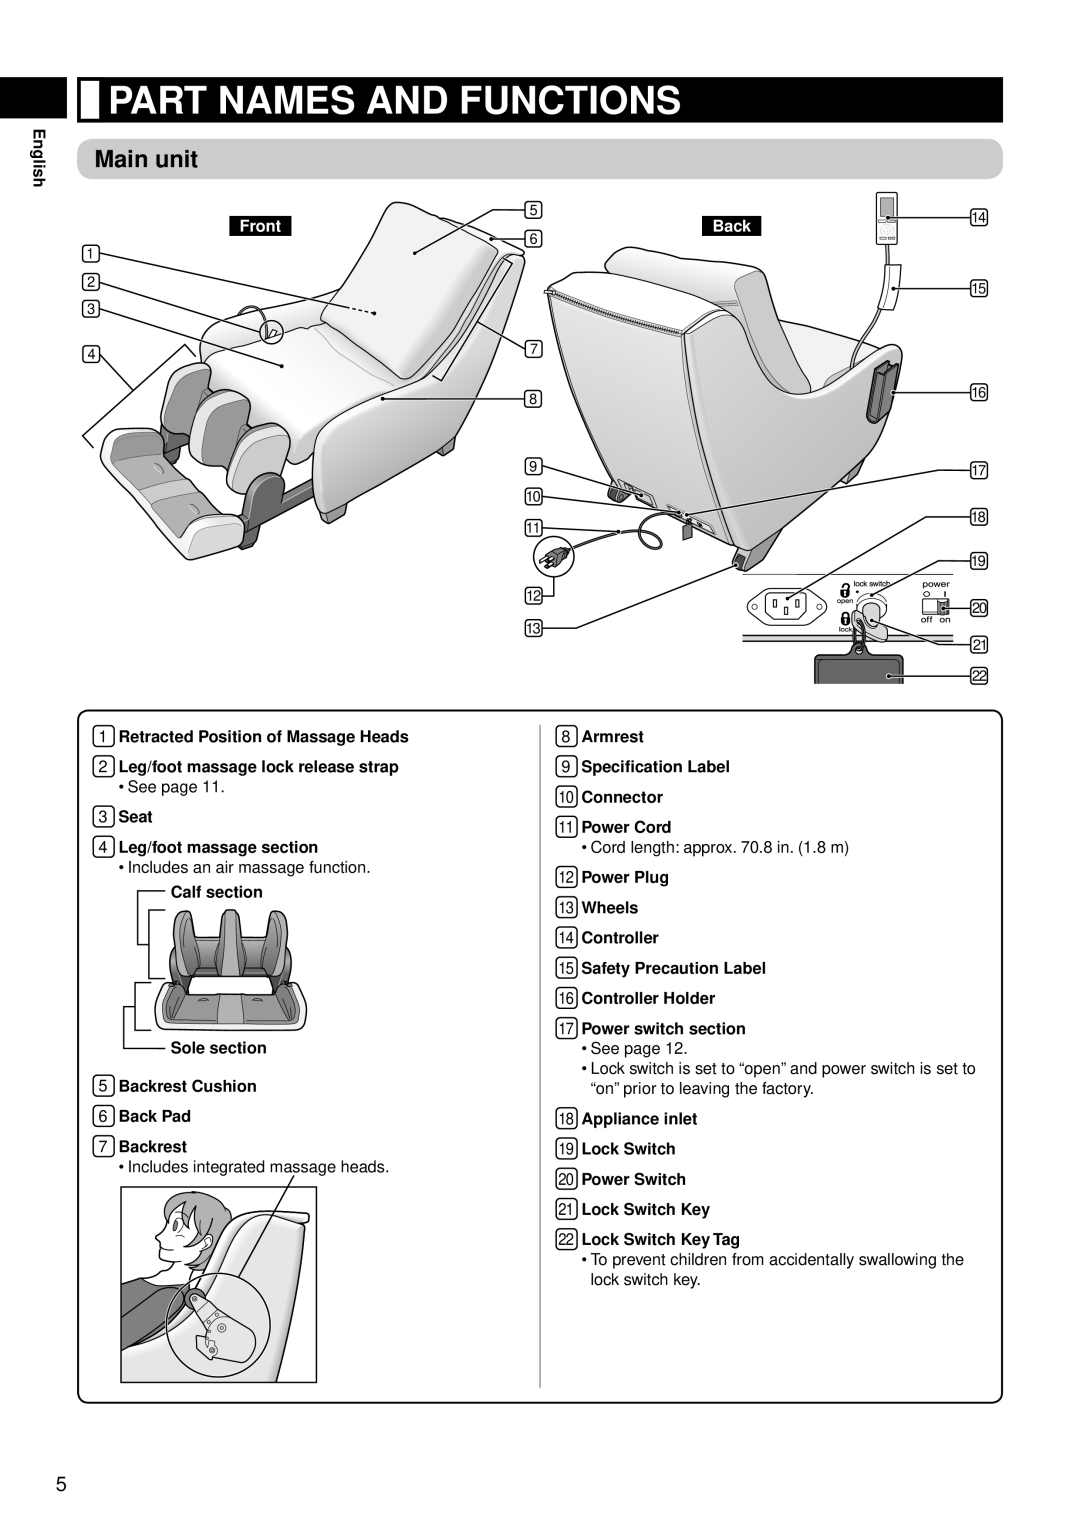 Panasonic EP-MS40 manual Part Names And Functions, Main unit, Front, Back 